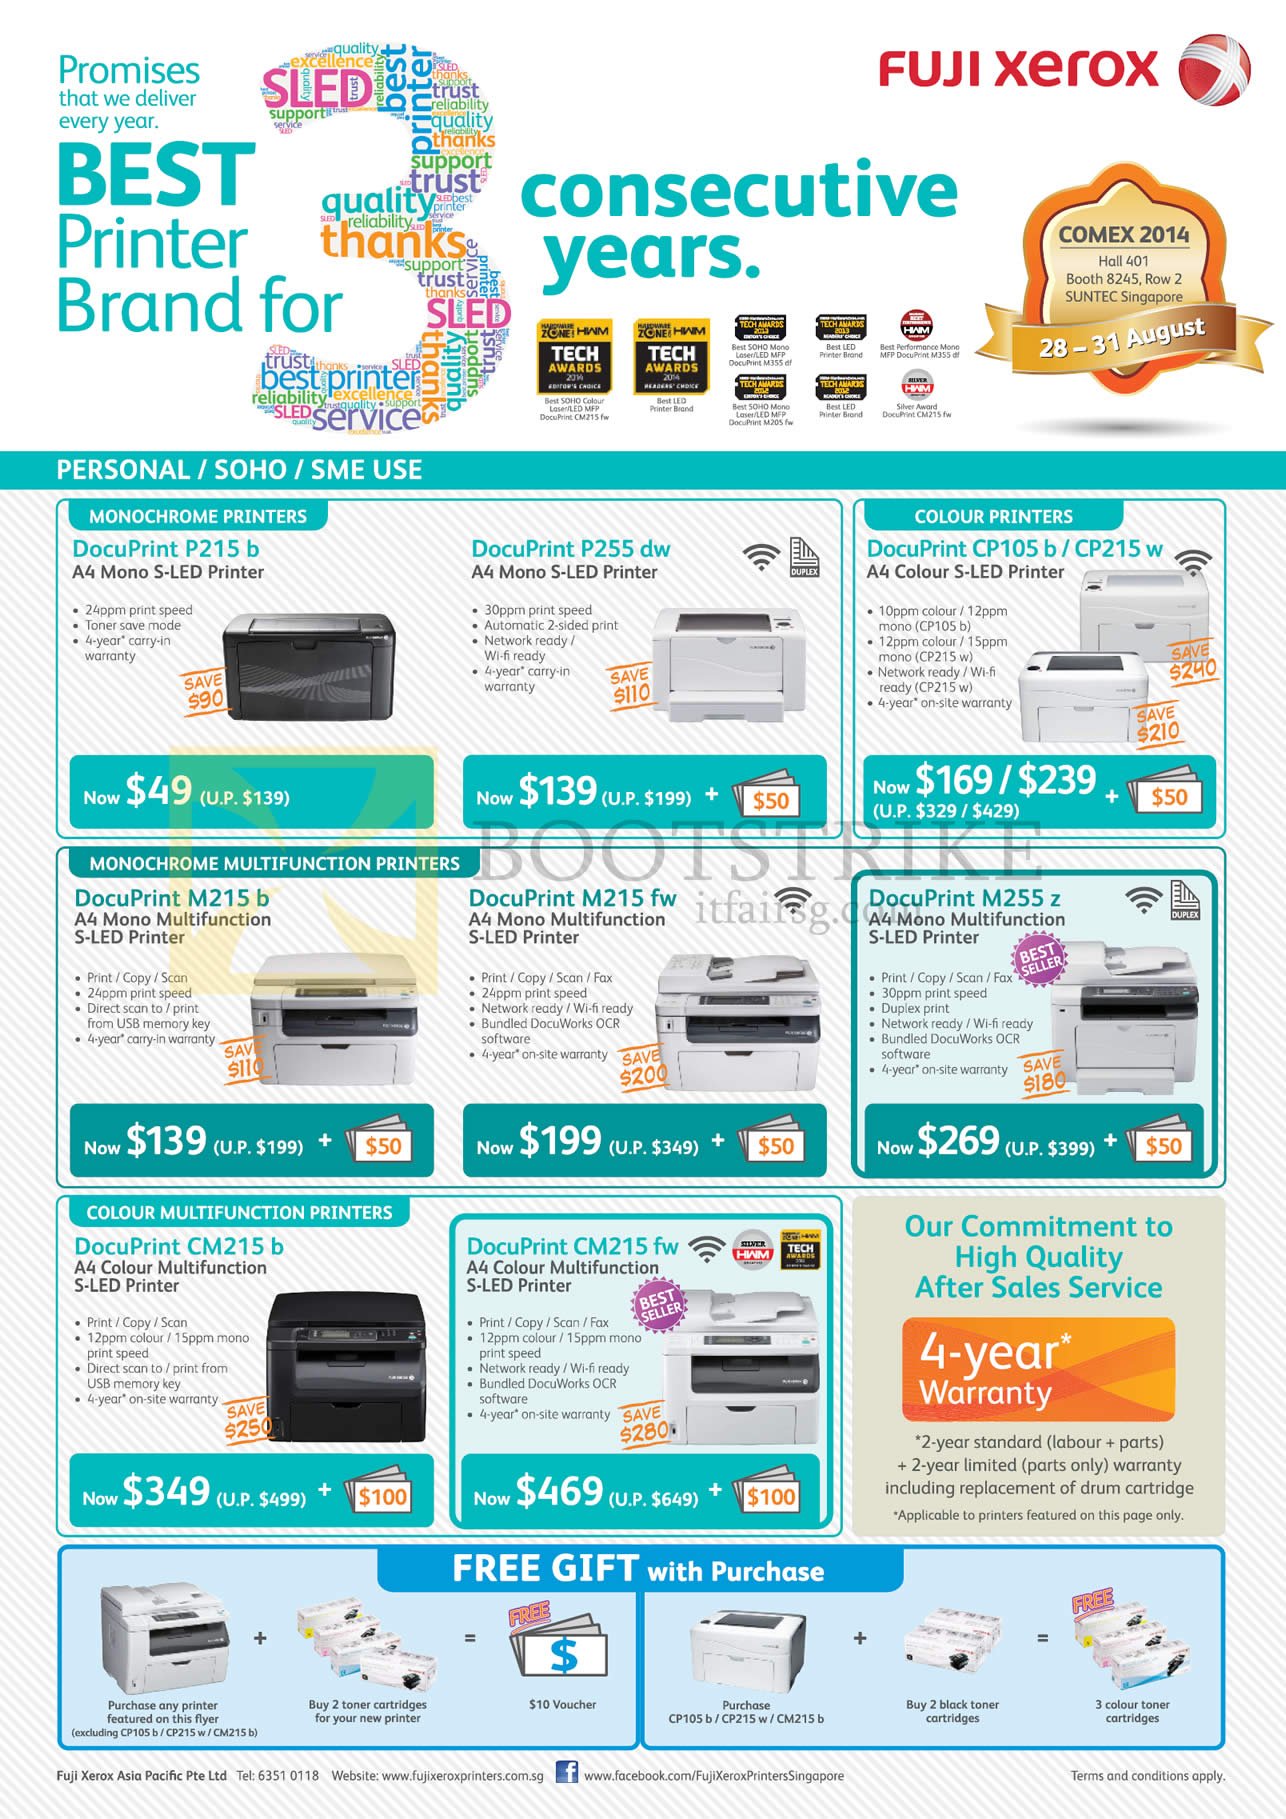 COMEX 2014 price list image brochure of Fuji Xerox Printers DocuPrint P215b, P255dw, M215b, M215fw, CM215b, CM215fw, CP105b, CP215w, M255z, Free Gifts